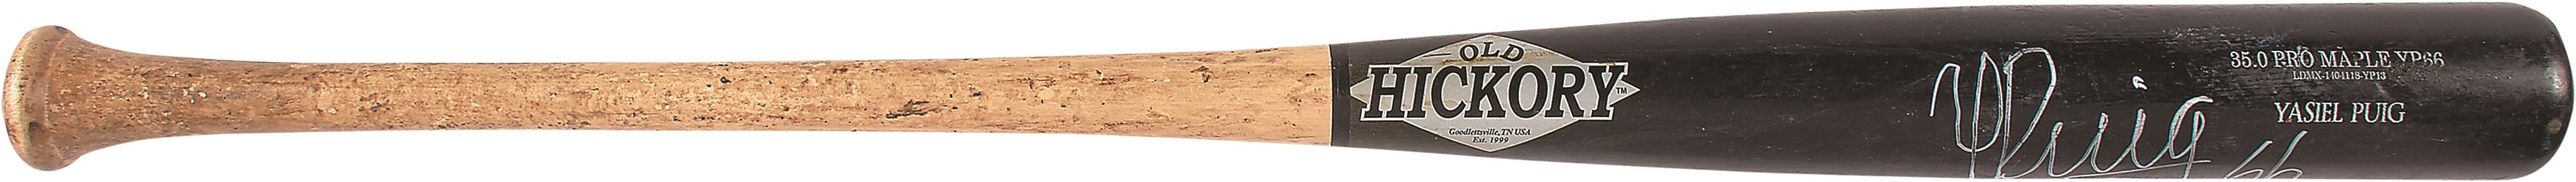 2013 Rookie Yasiel Puig Signed Game Used Bat